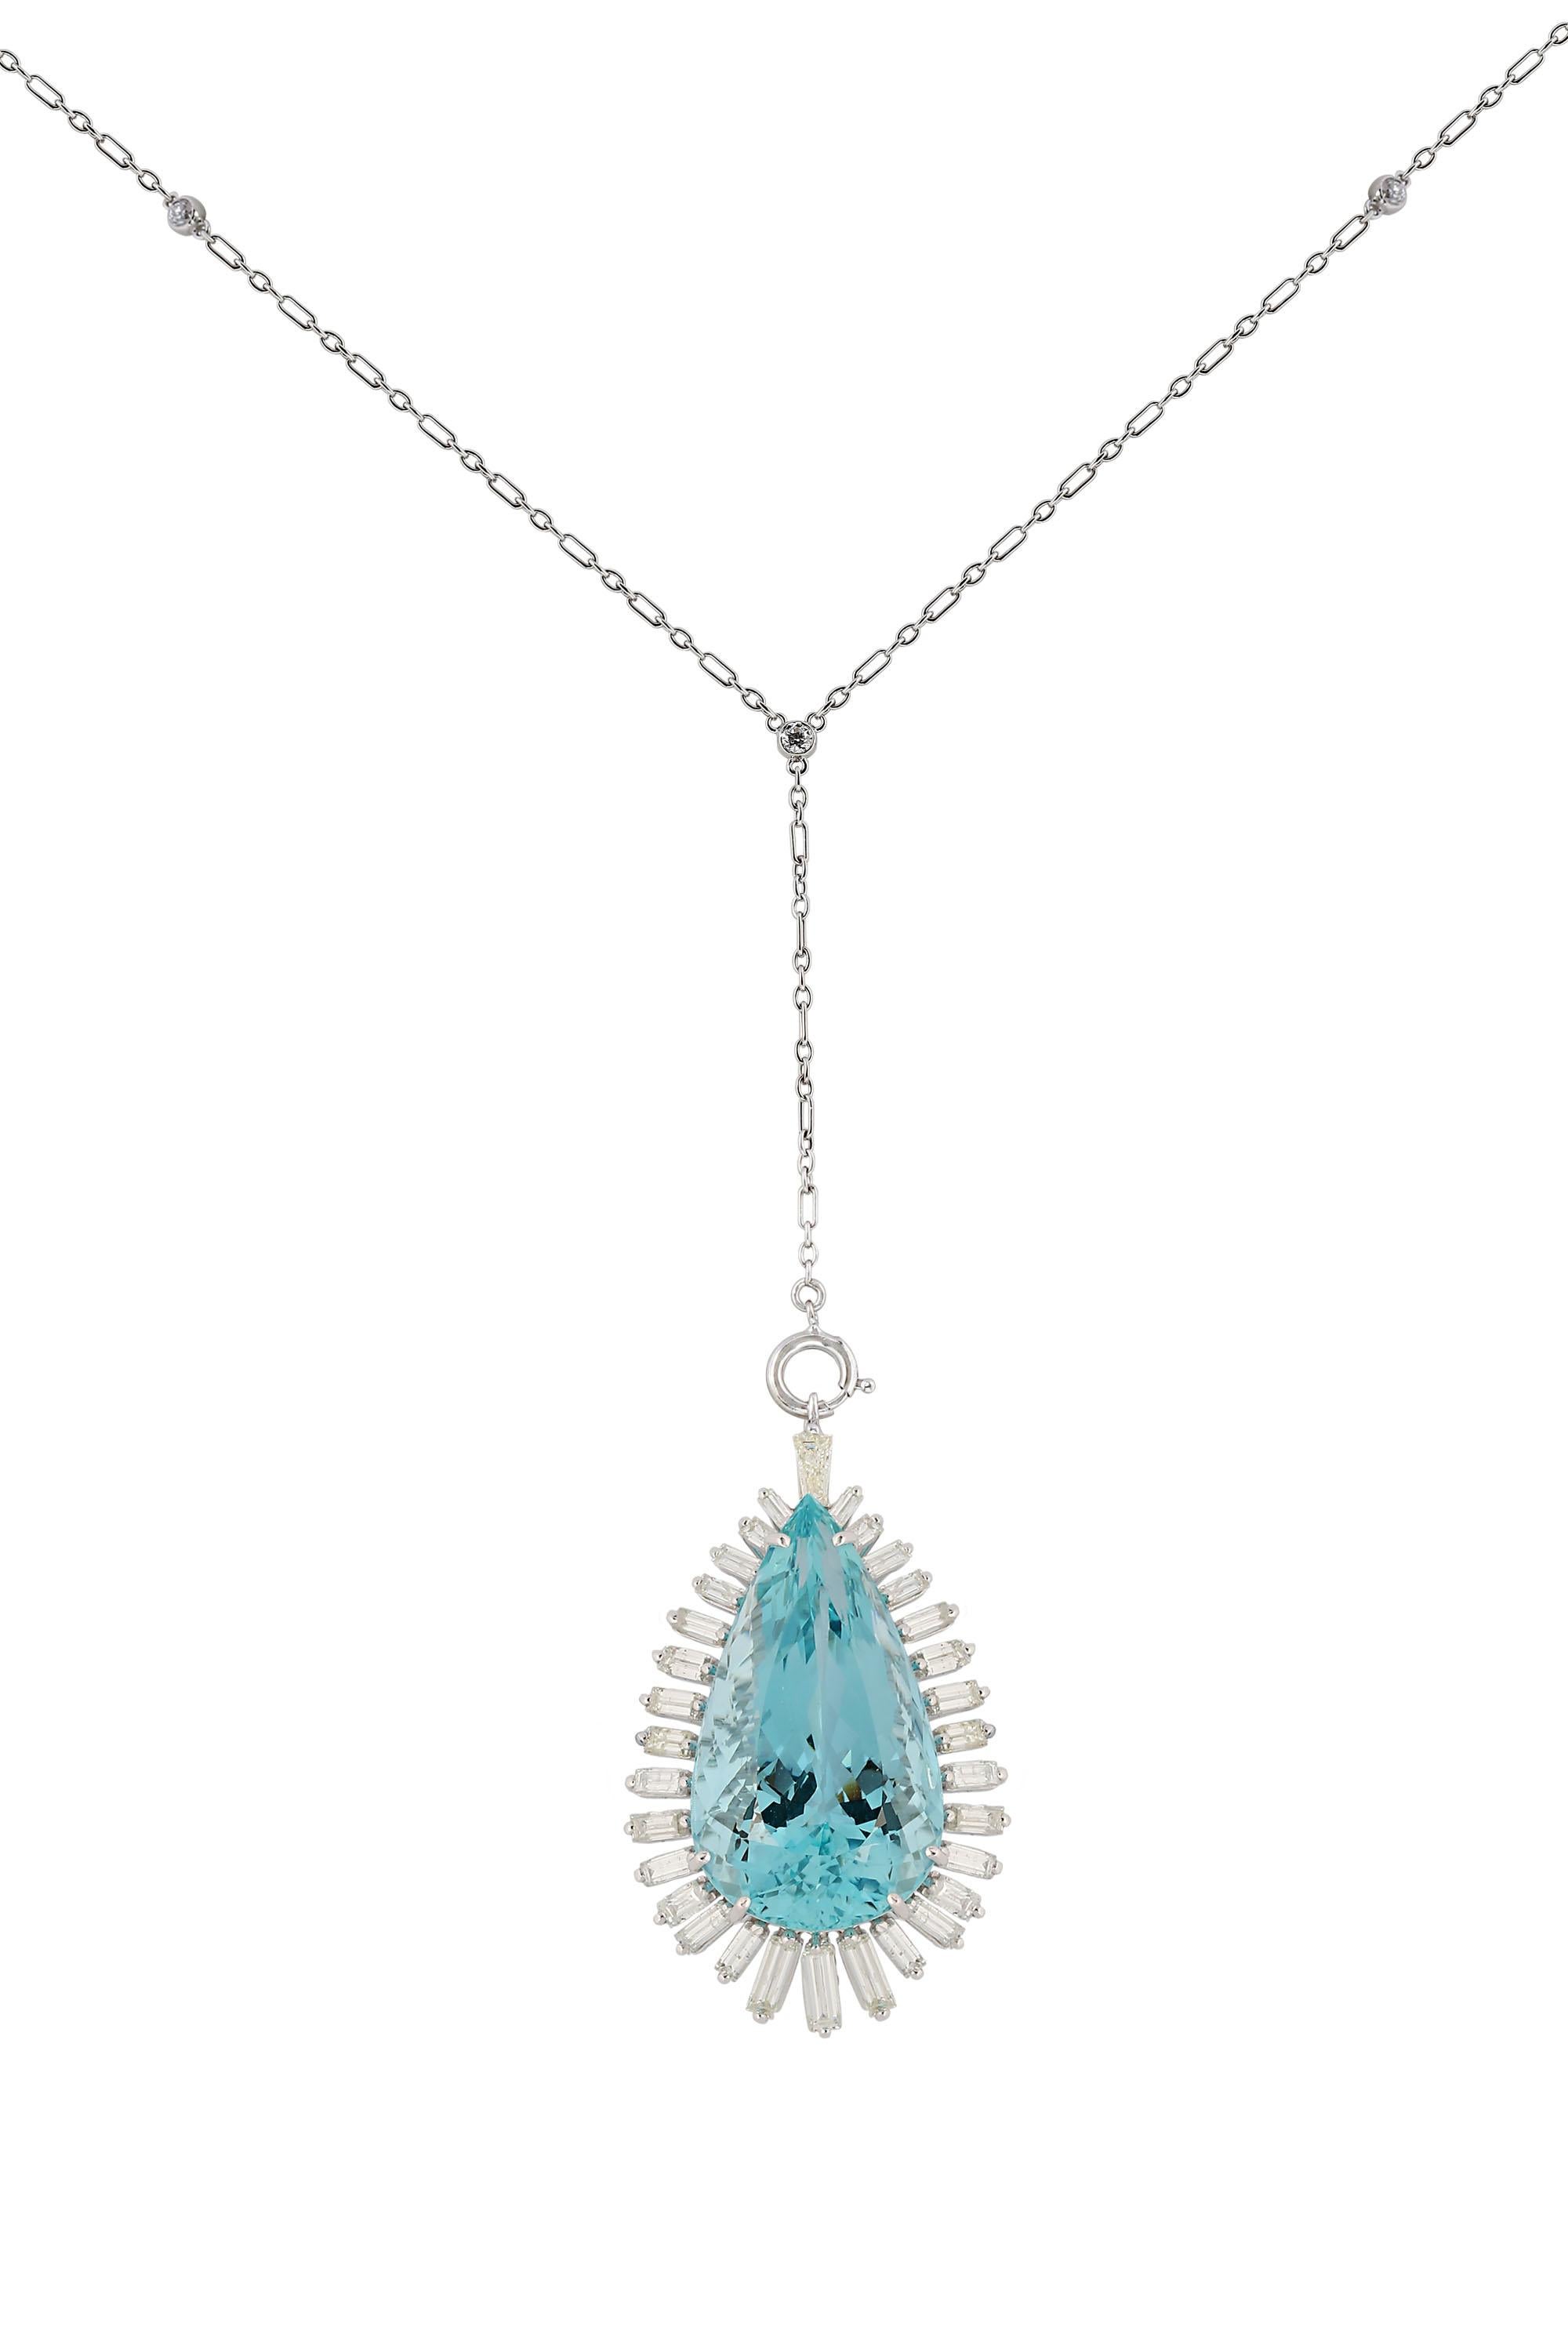 43 Carat Aquamarine and Baguette Diamond Pendant Enhancer For Sale 2